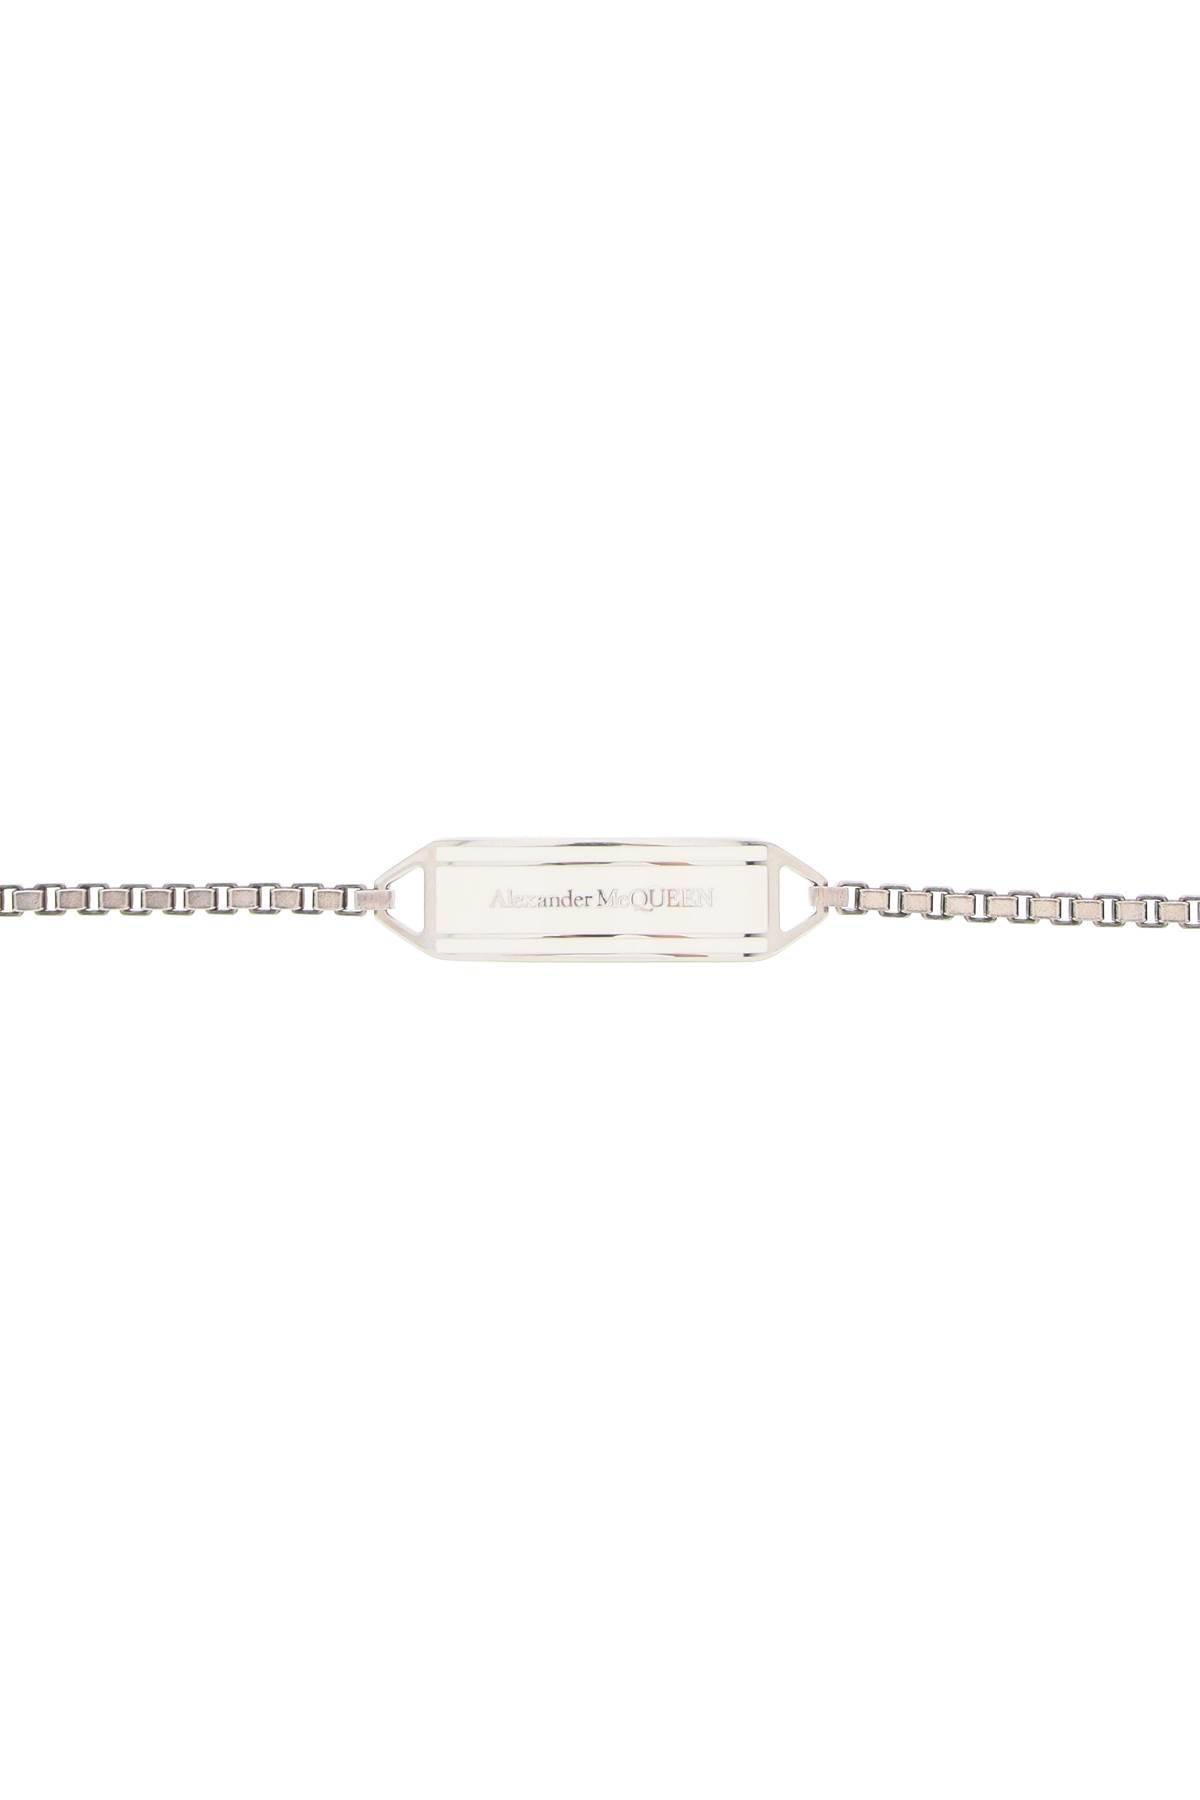 Alexander mcqueen identity chain bracelet-1